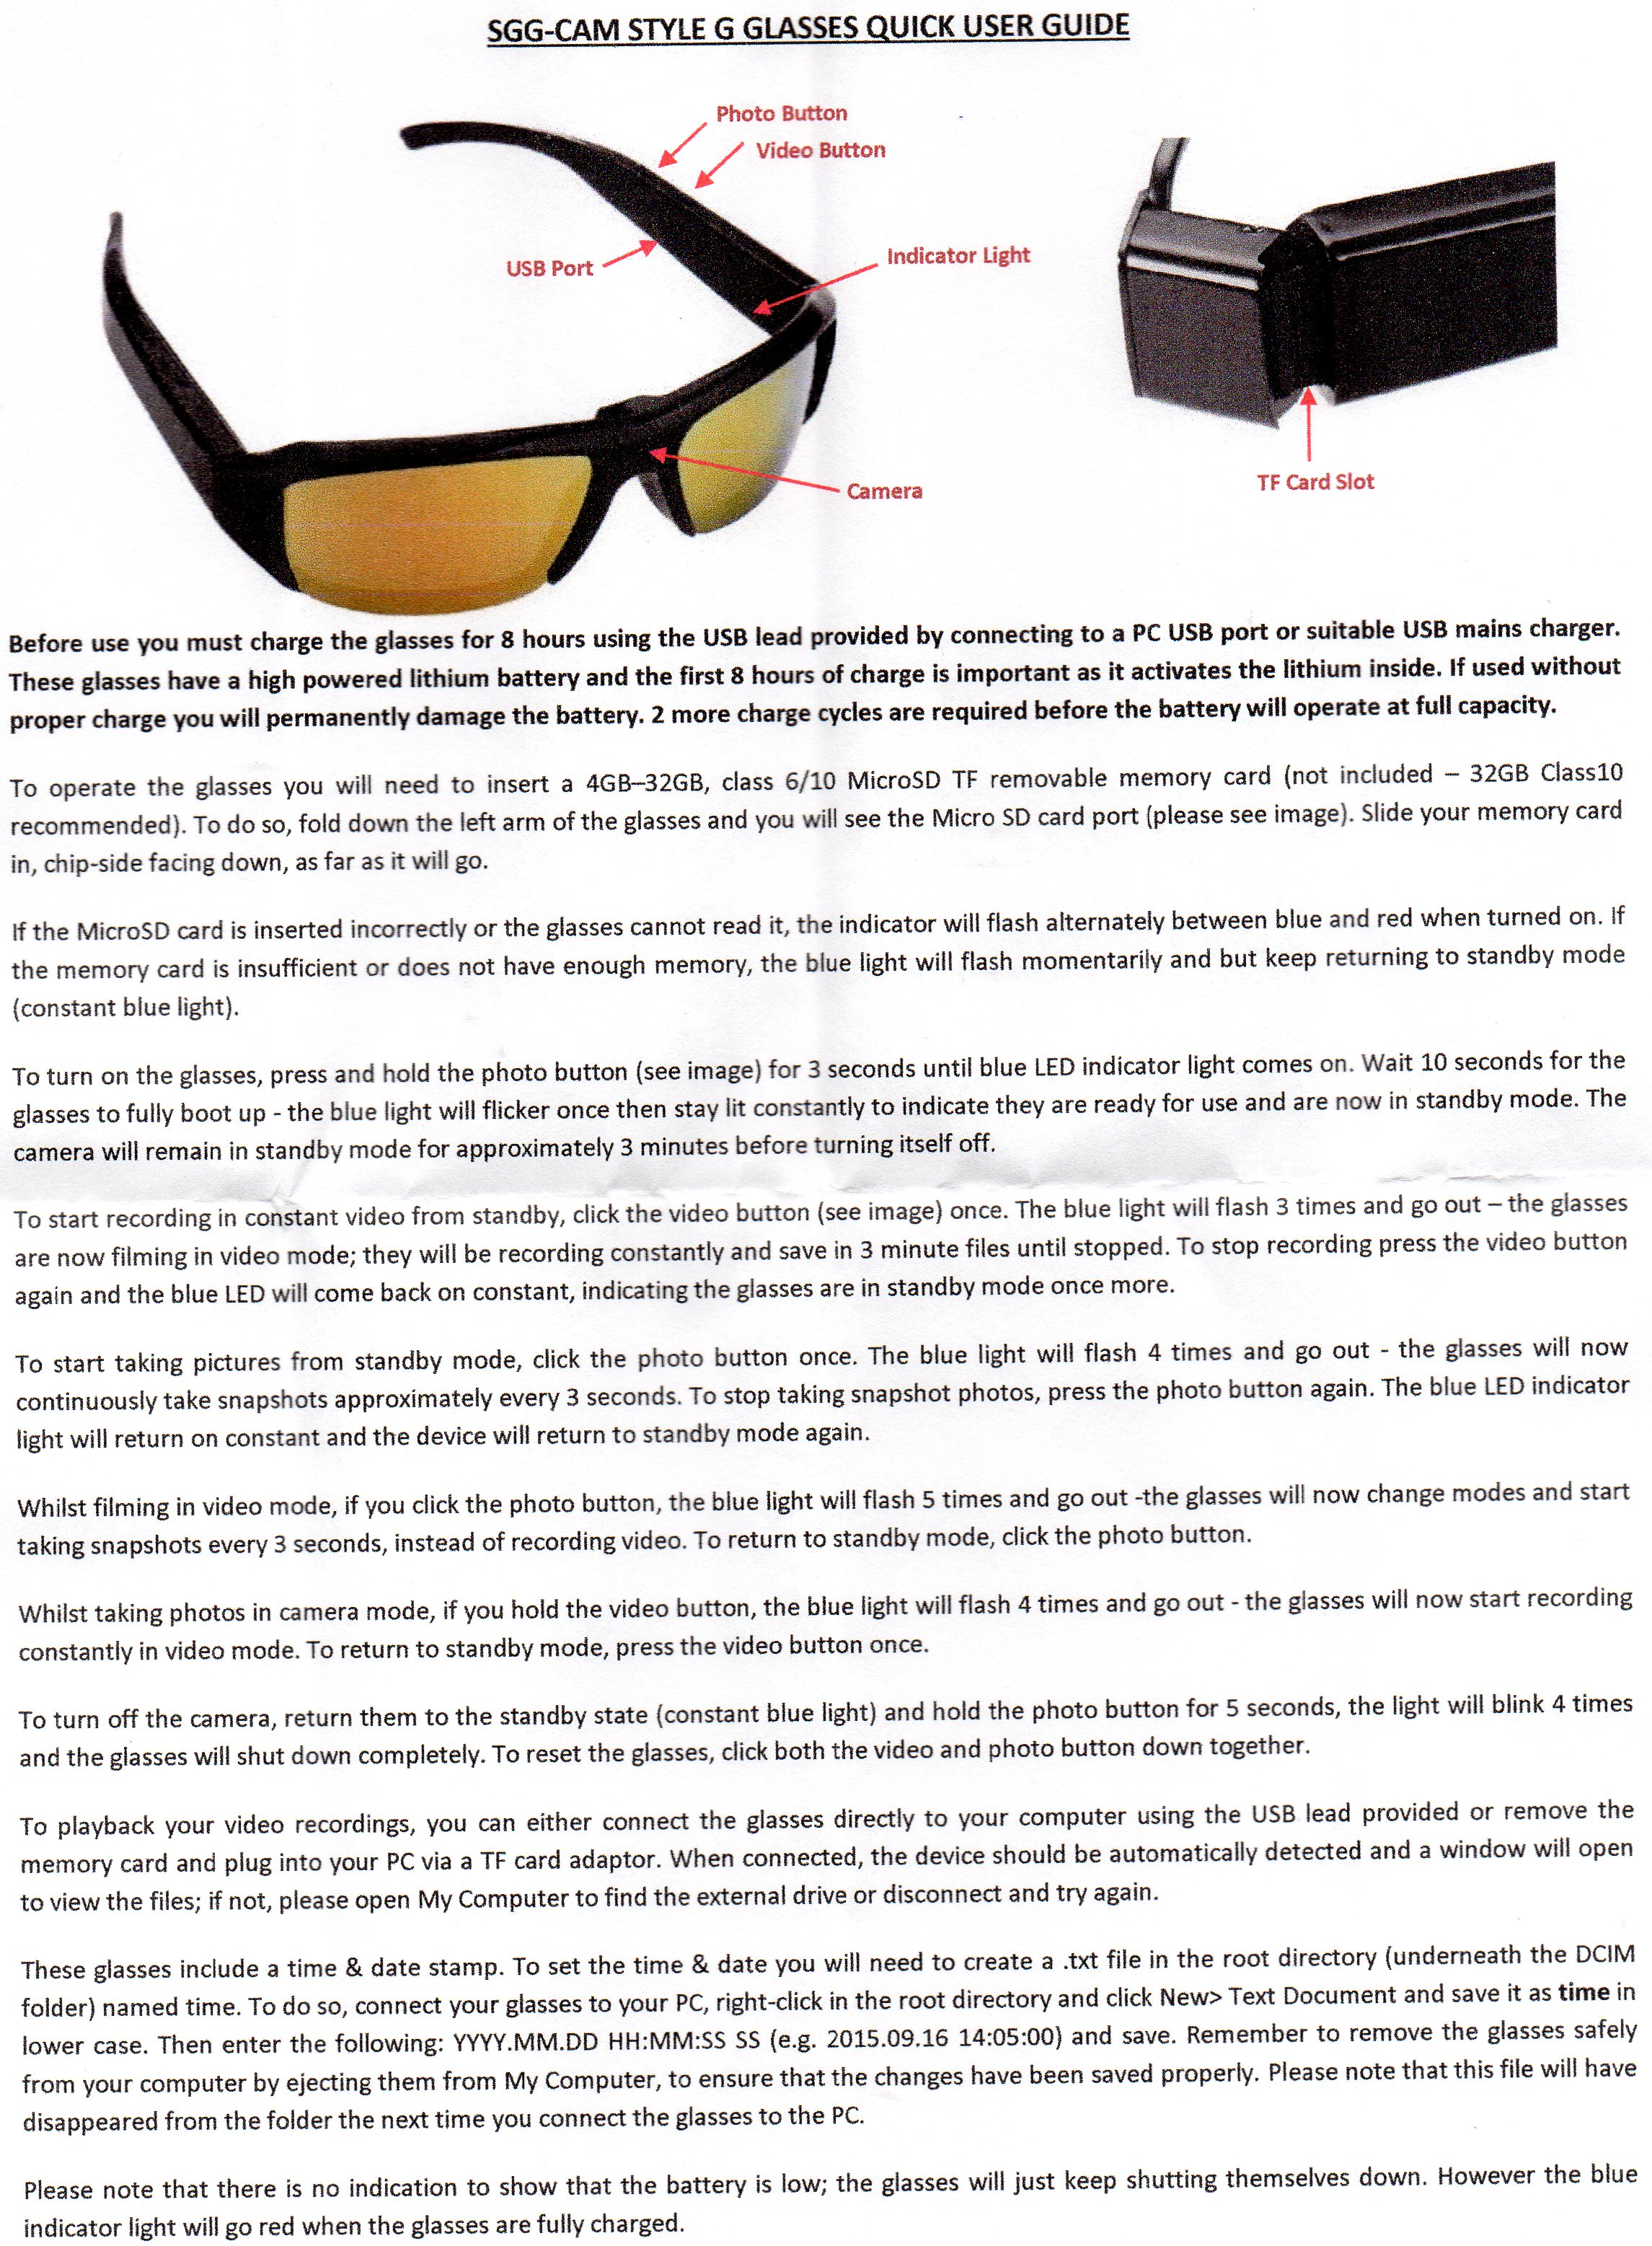 720p hd camera eyewear instructions